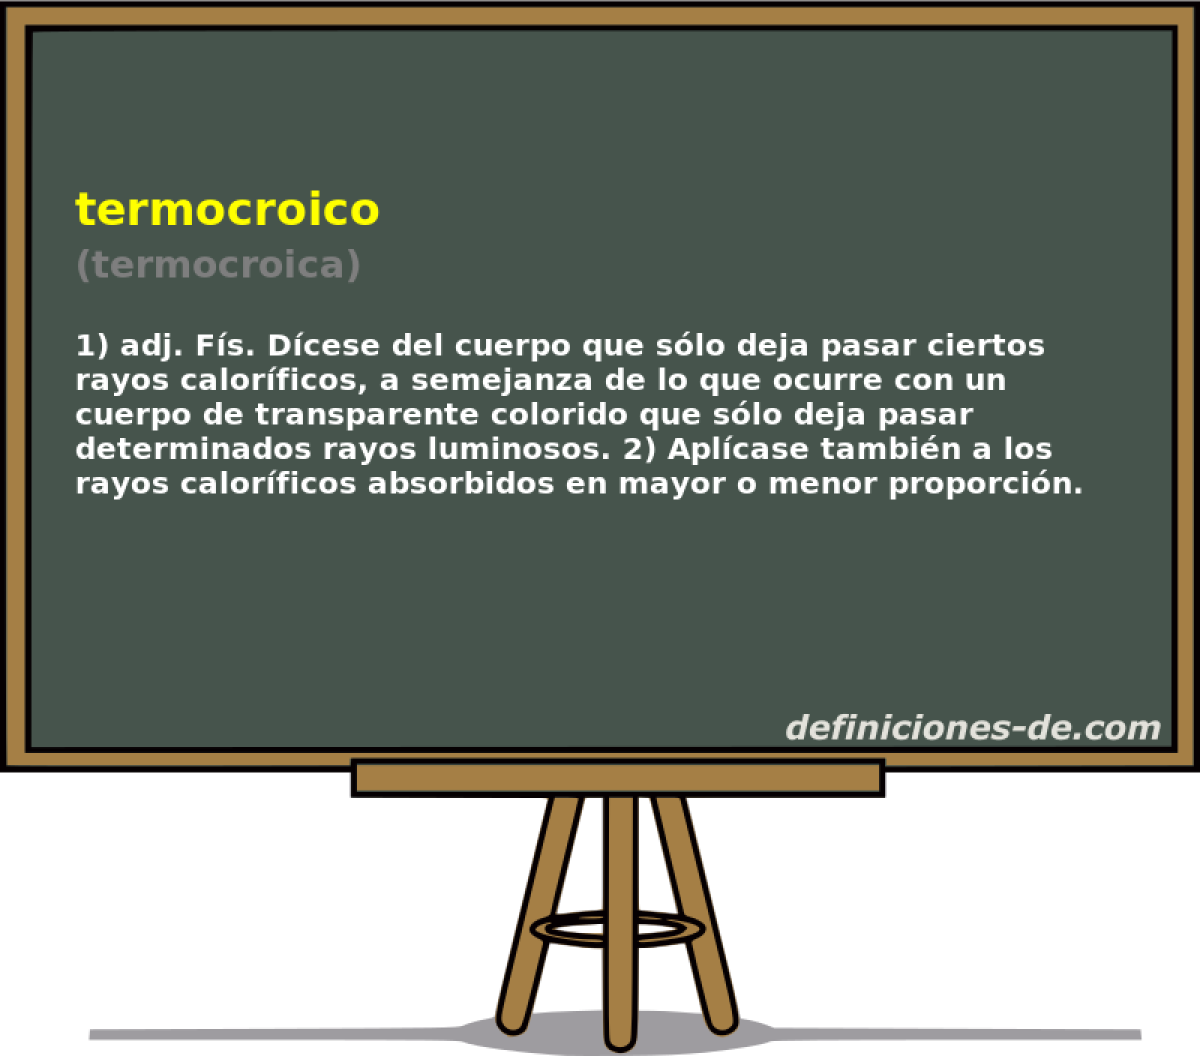 termocroico (termocroica)